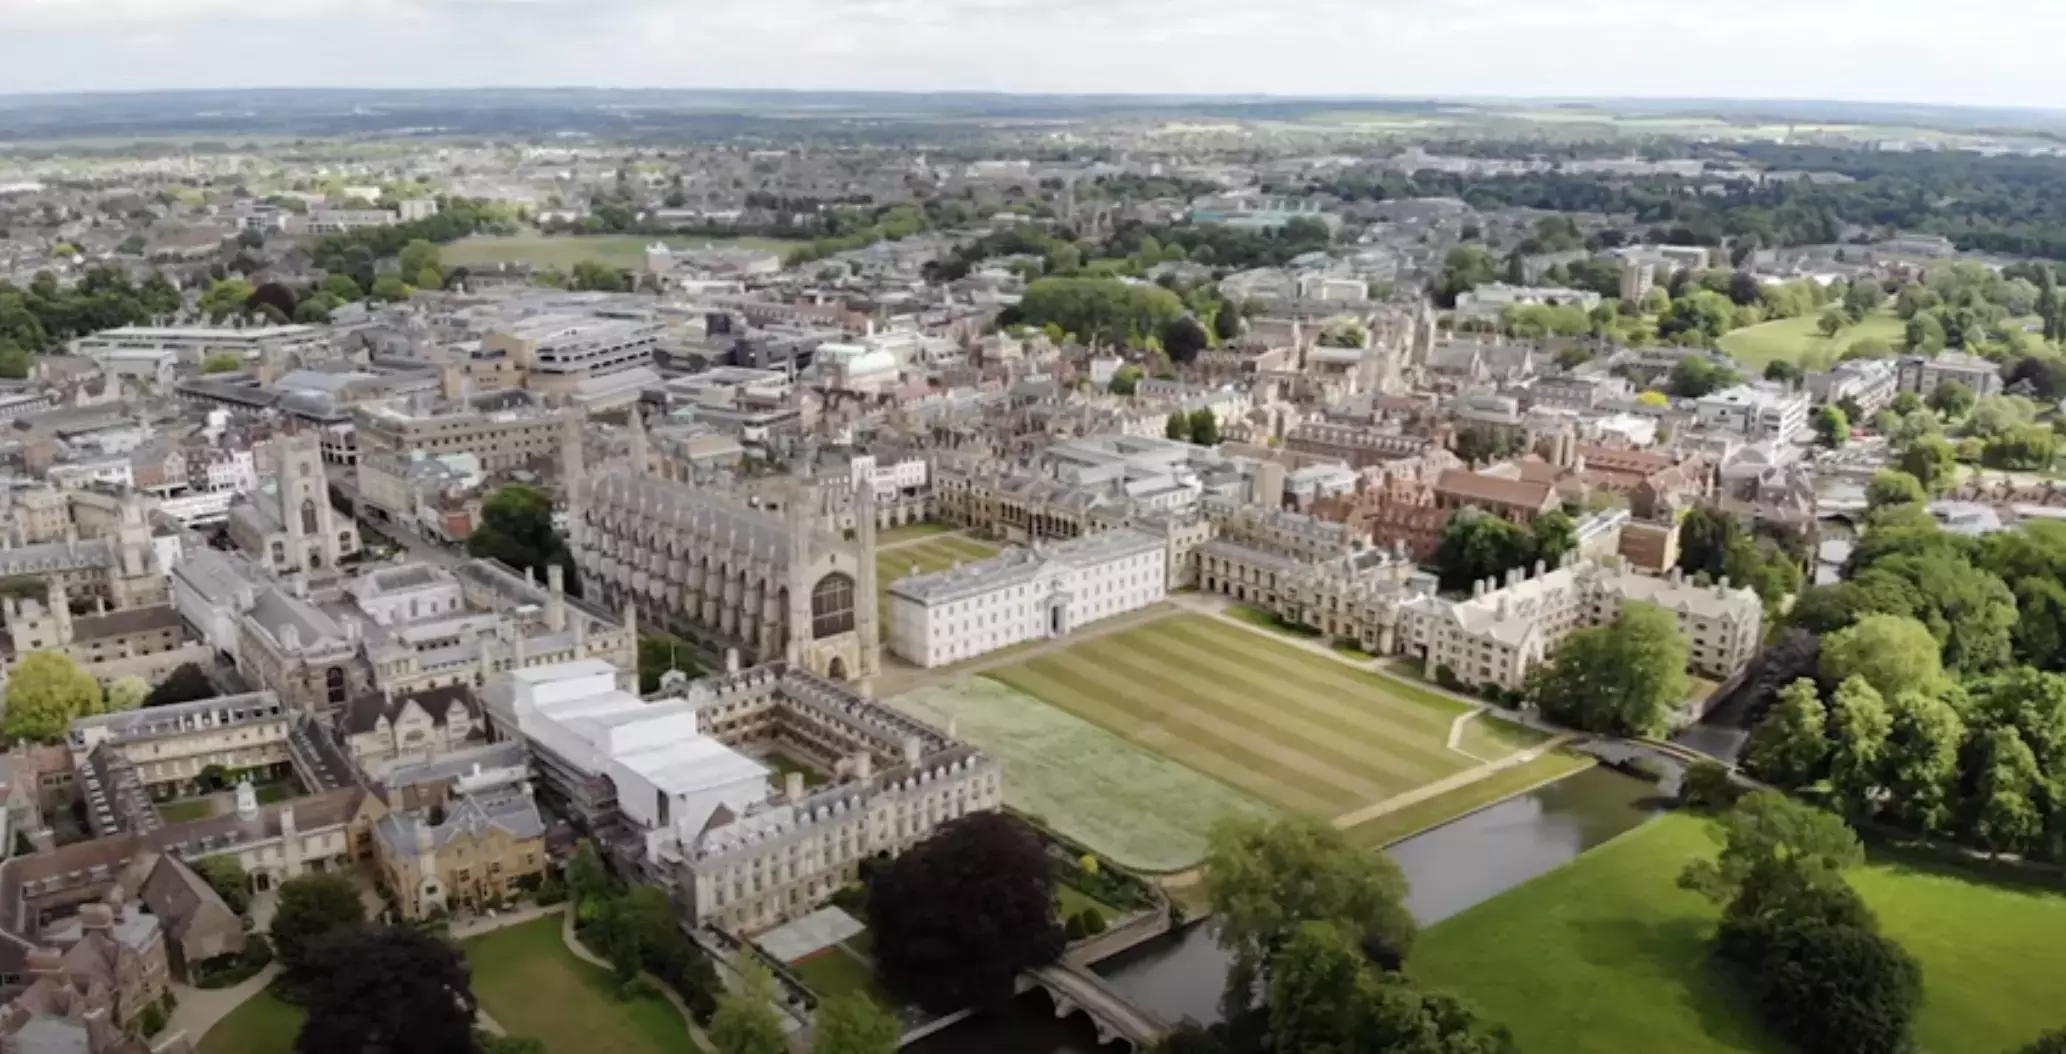 Aerial view of Cambridge